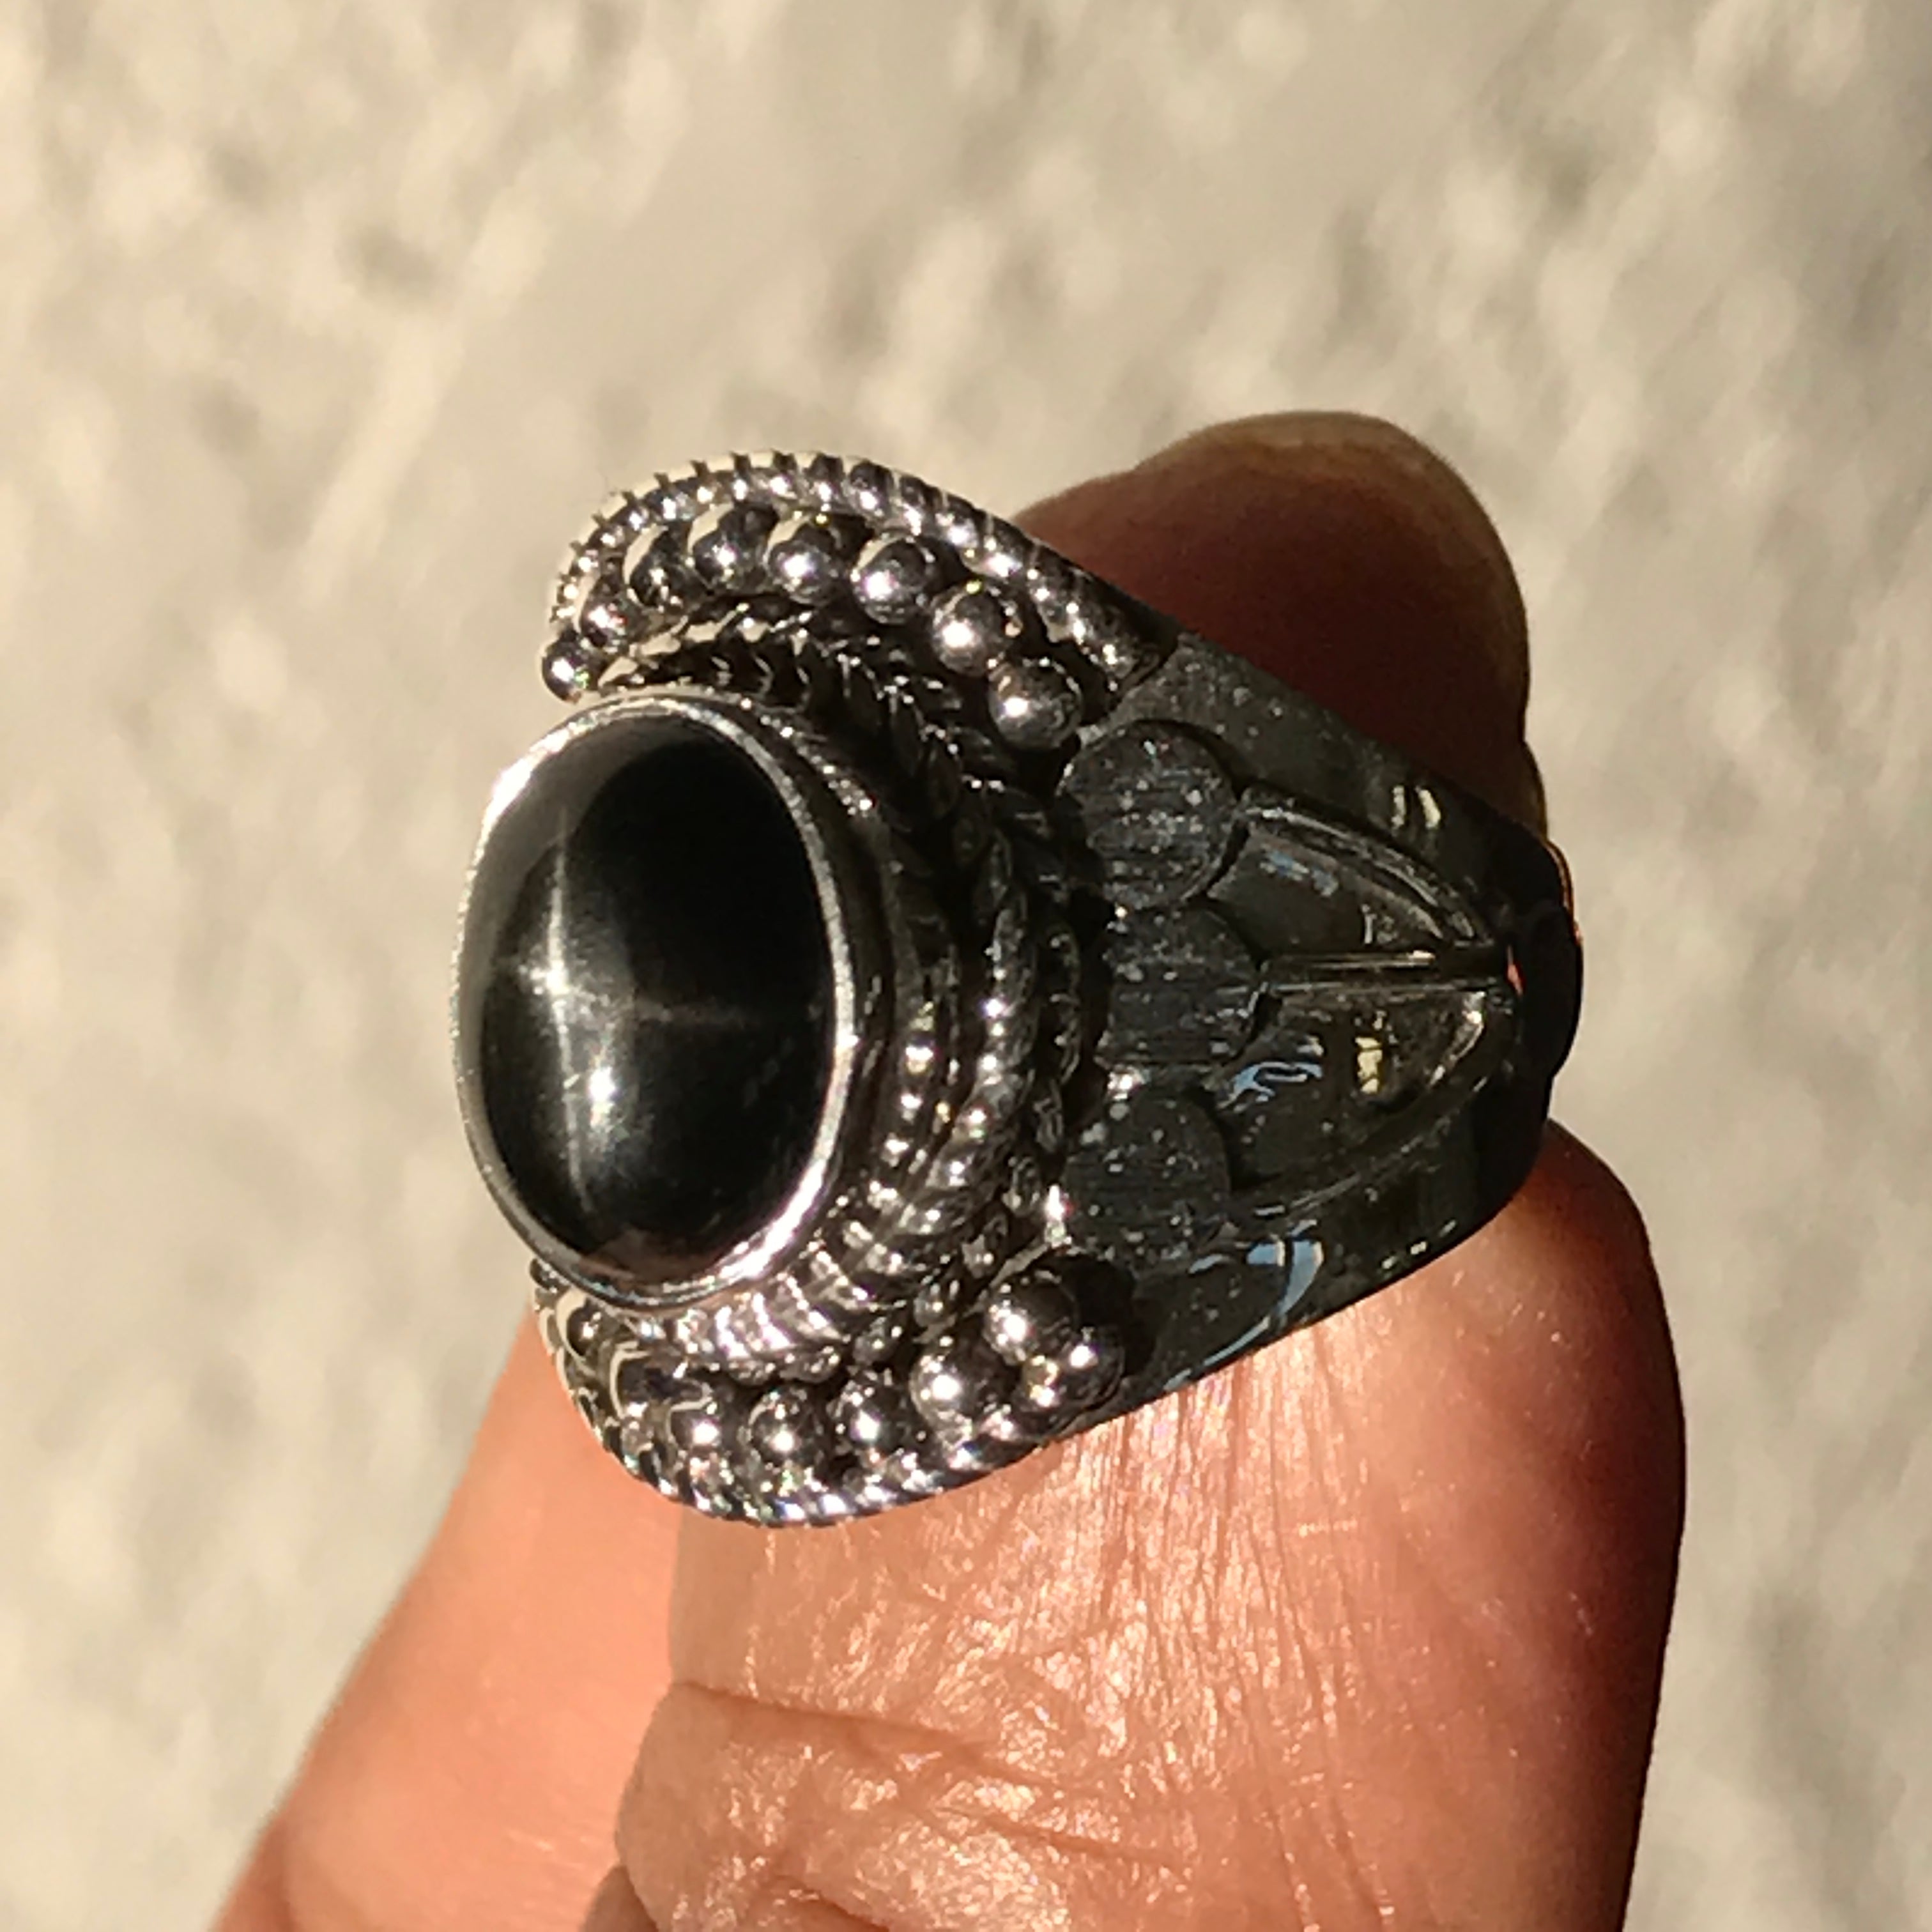 Genuine Black Star Diopside 925 Solid Sterling Silver Ring Size 5.5, 7.5, 7.75 - Natural Rocks by Kala